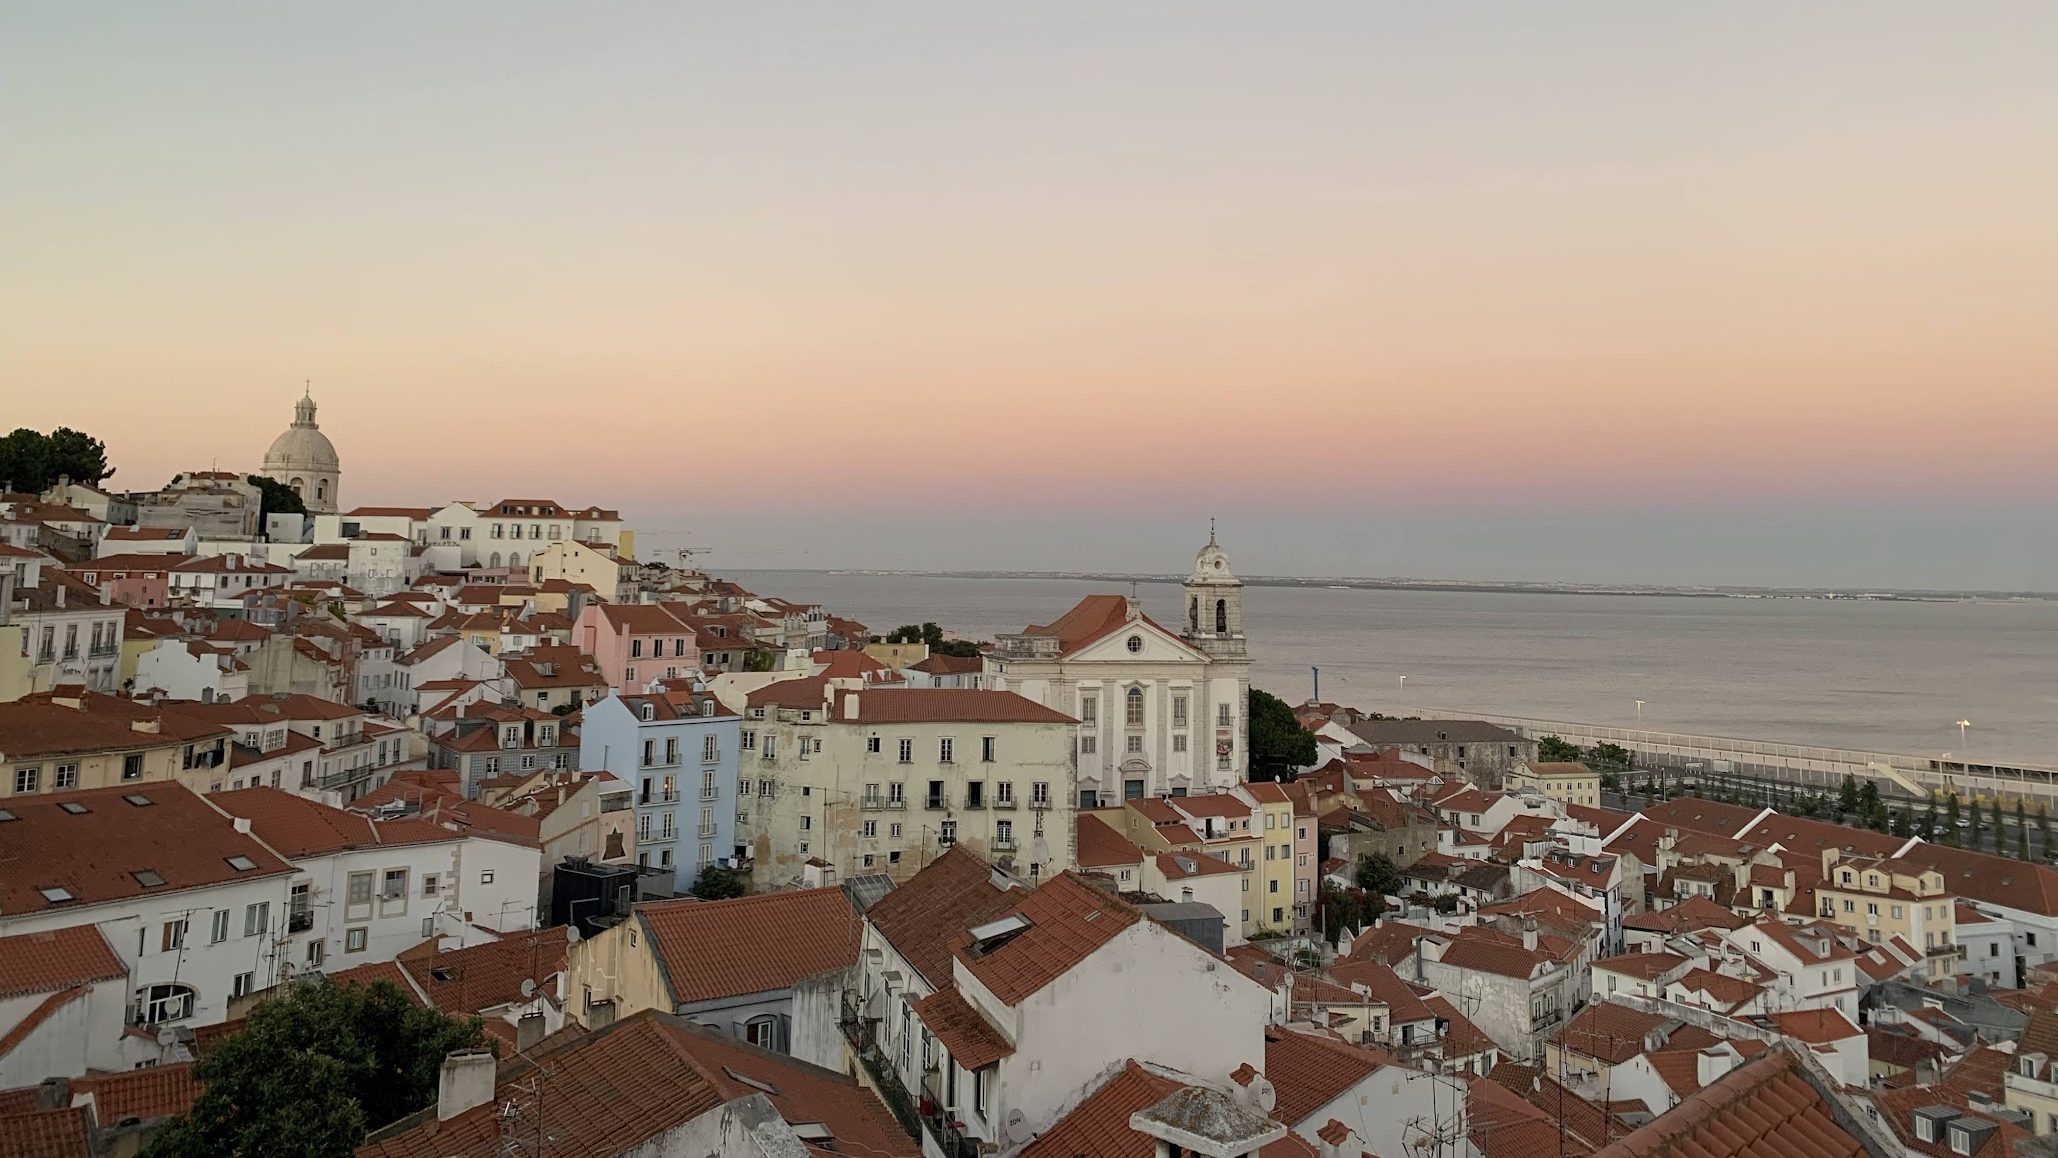 The Lisbon skyline at sunset